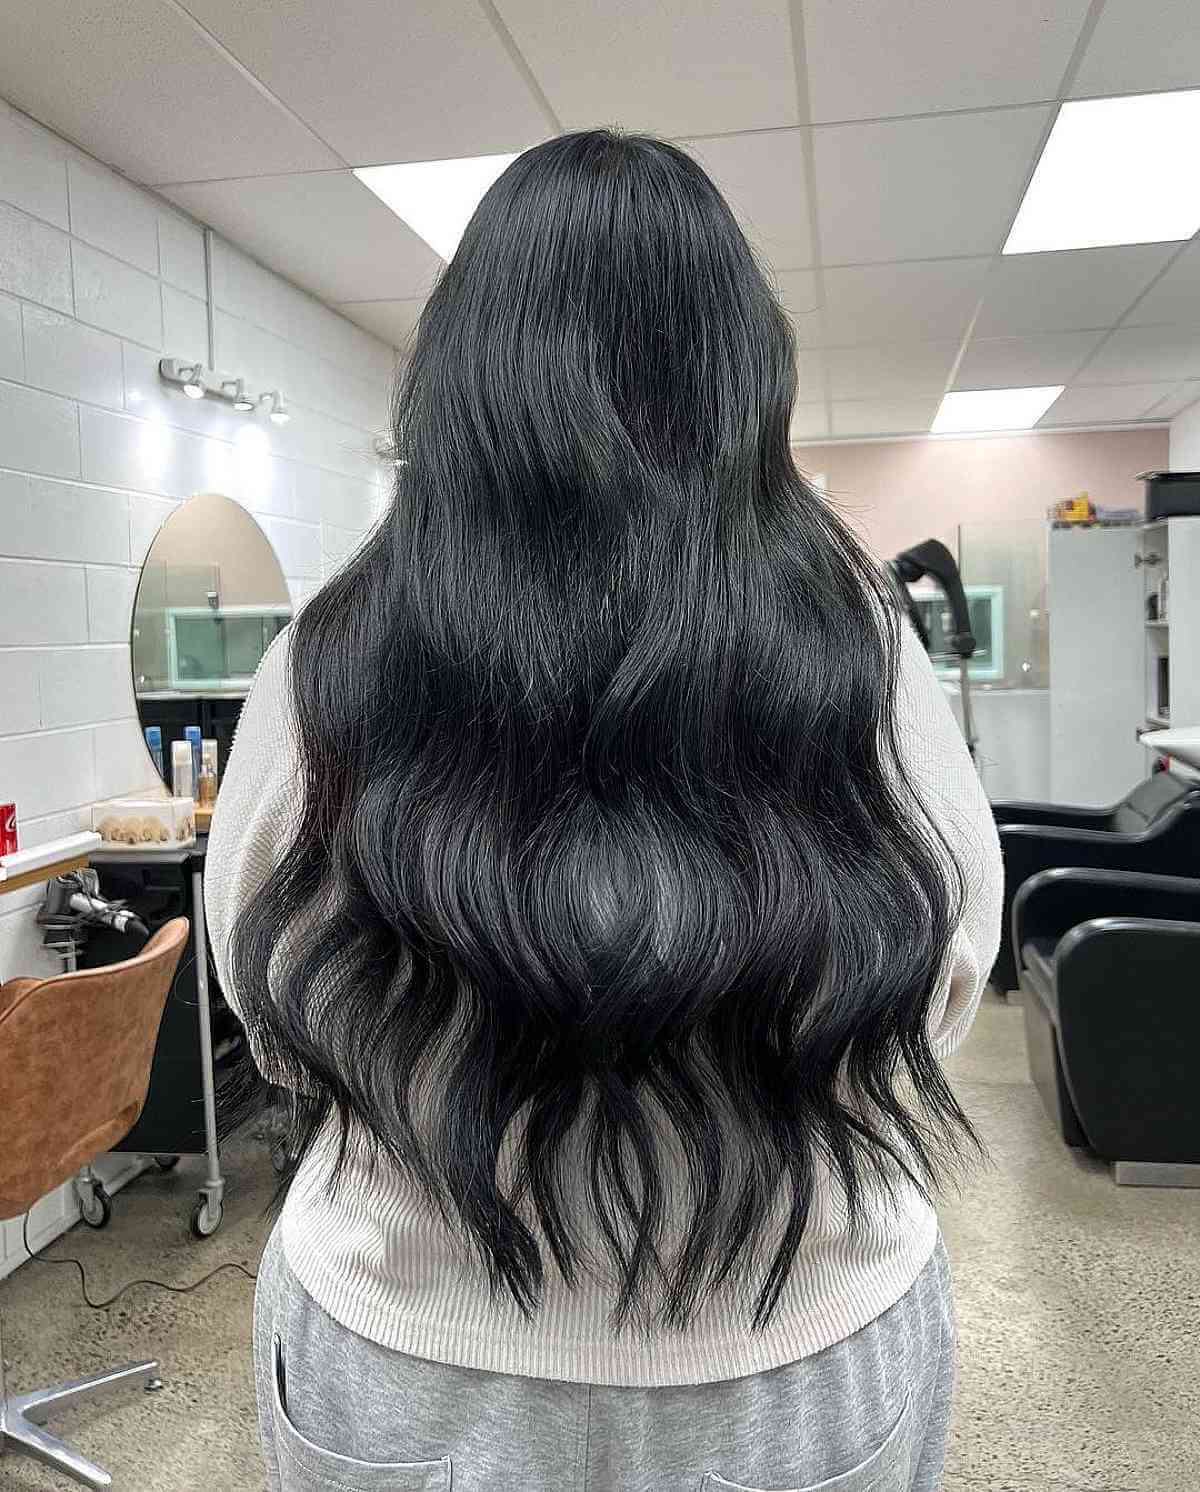 Choppy Long Black Hair with Waves